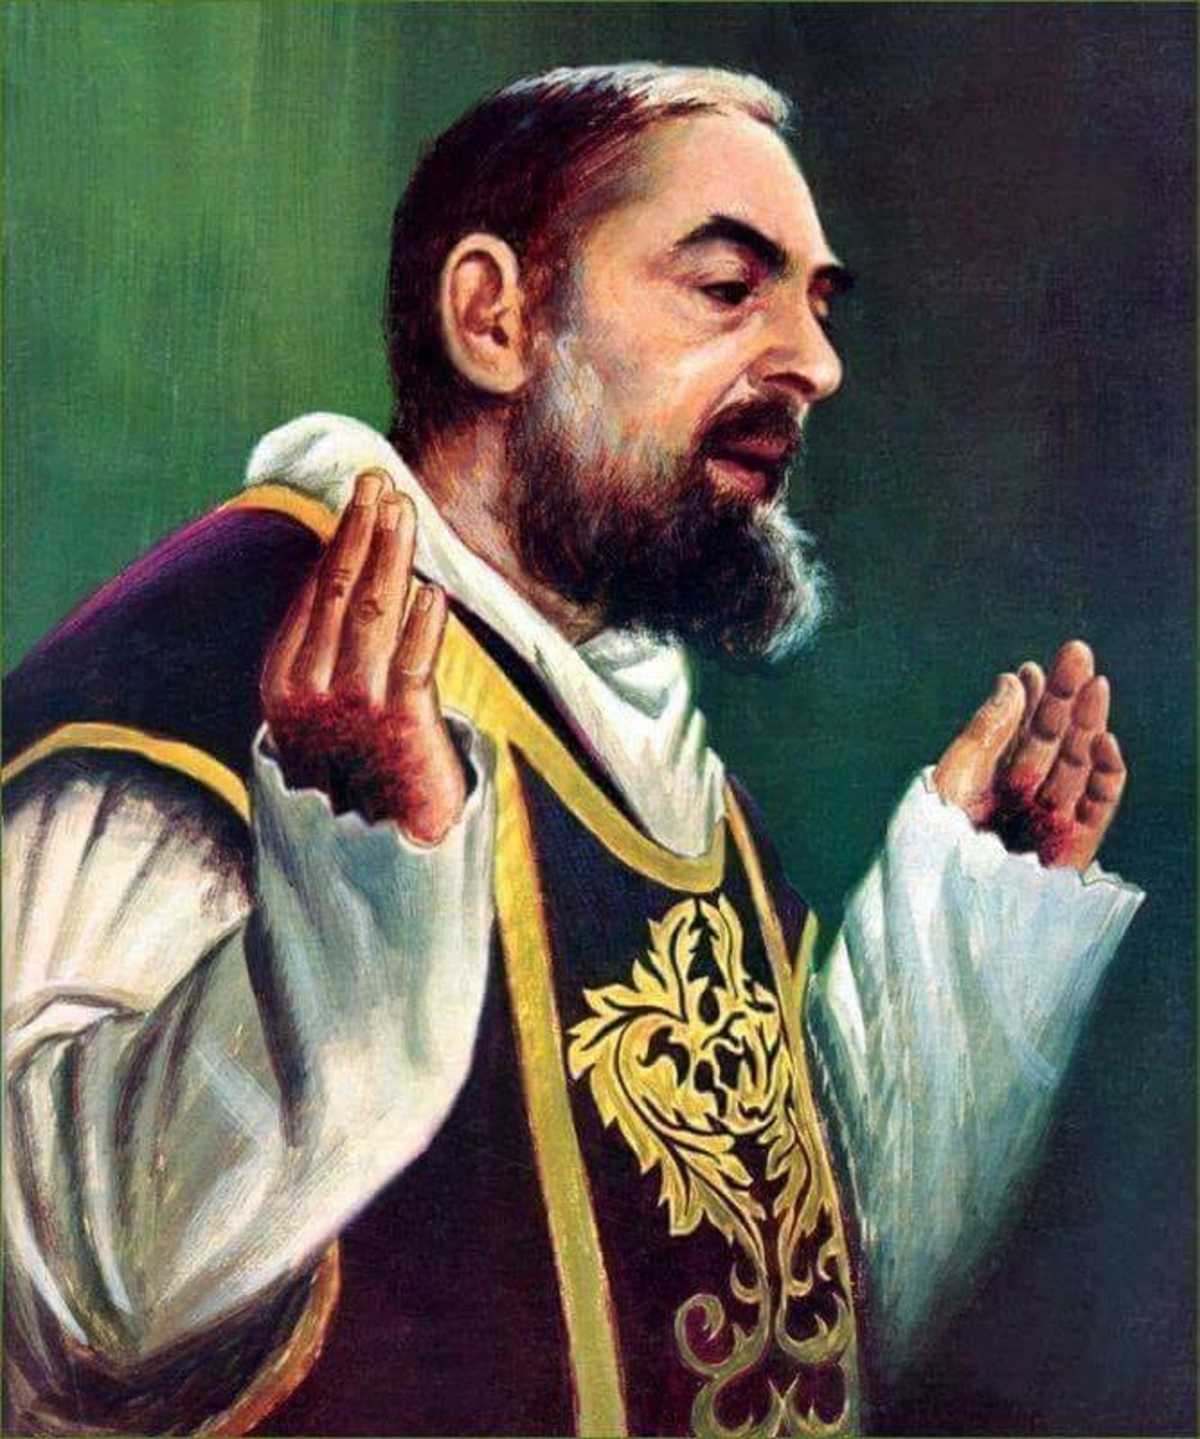 Padre Pio immagini religiose bellissime 5528